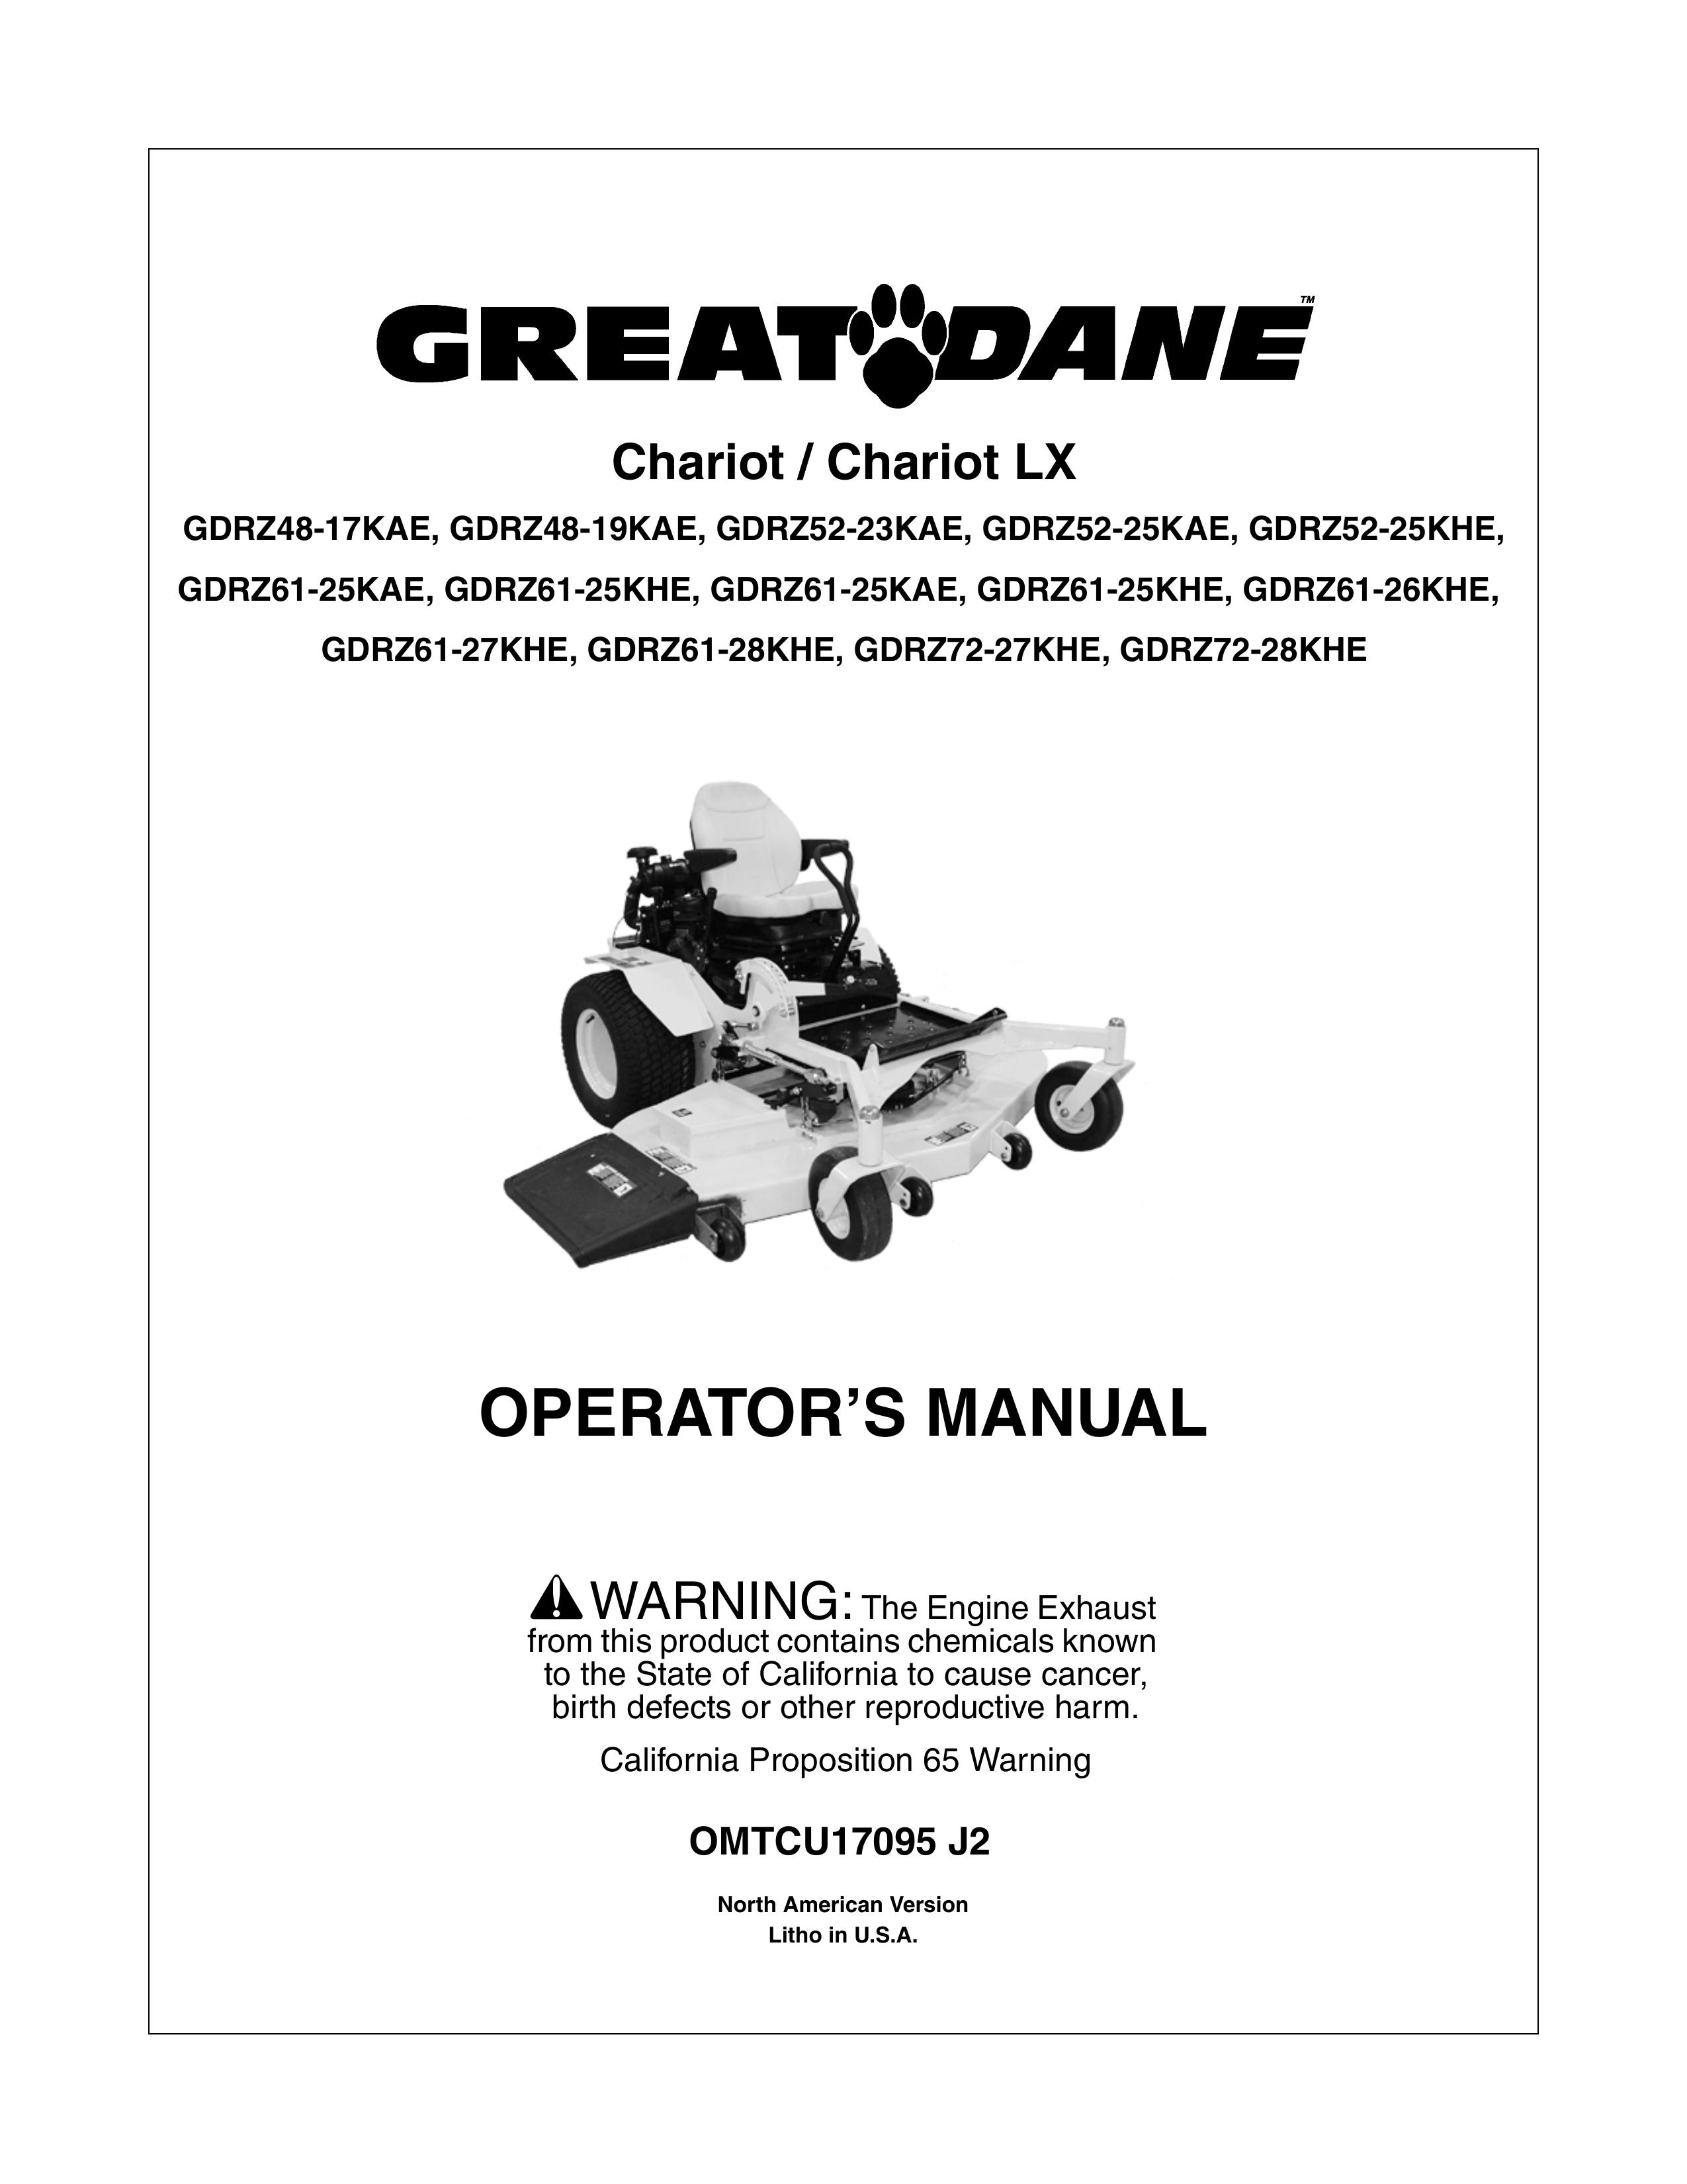 Great Dane GDRZ72-28KHE Lawn Mower User Manual